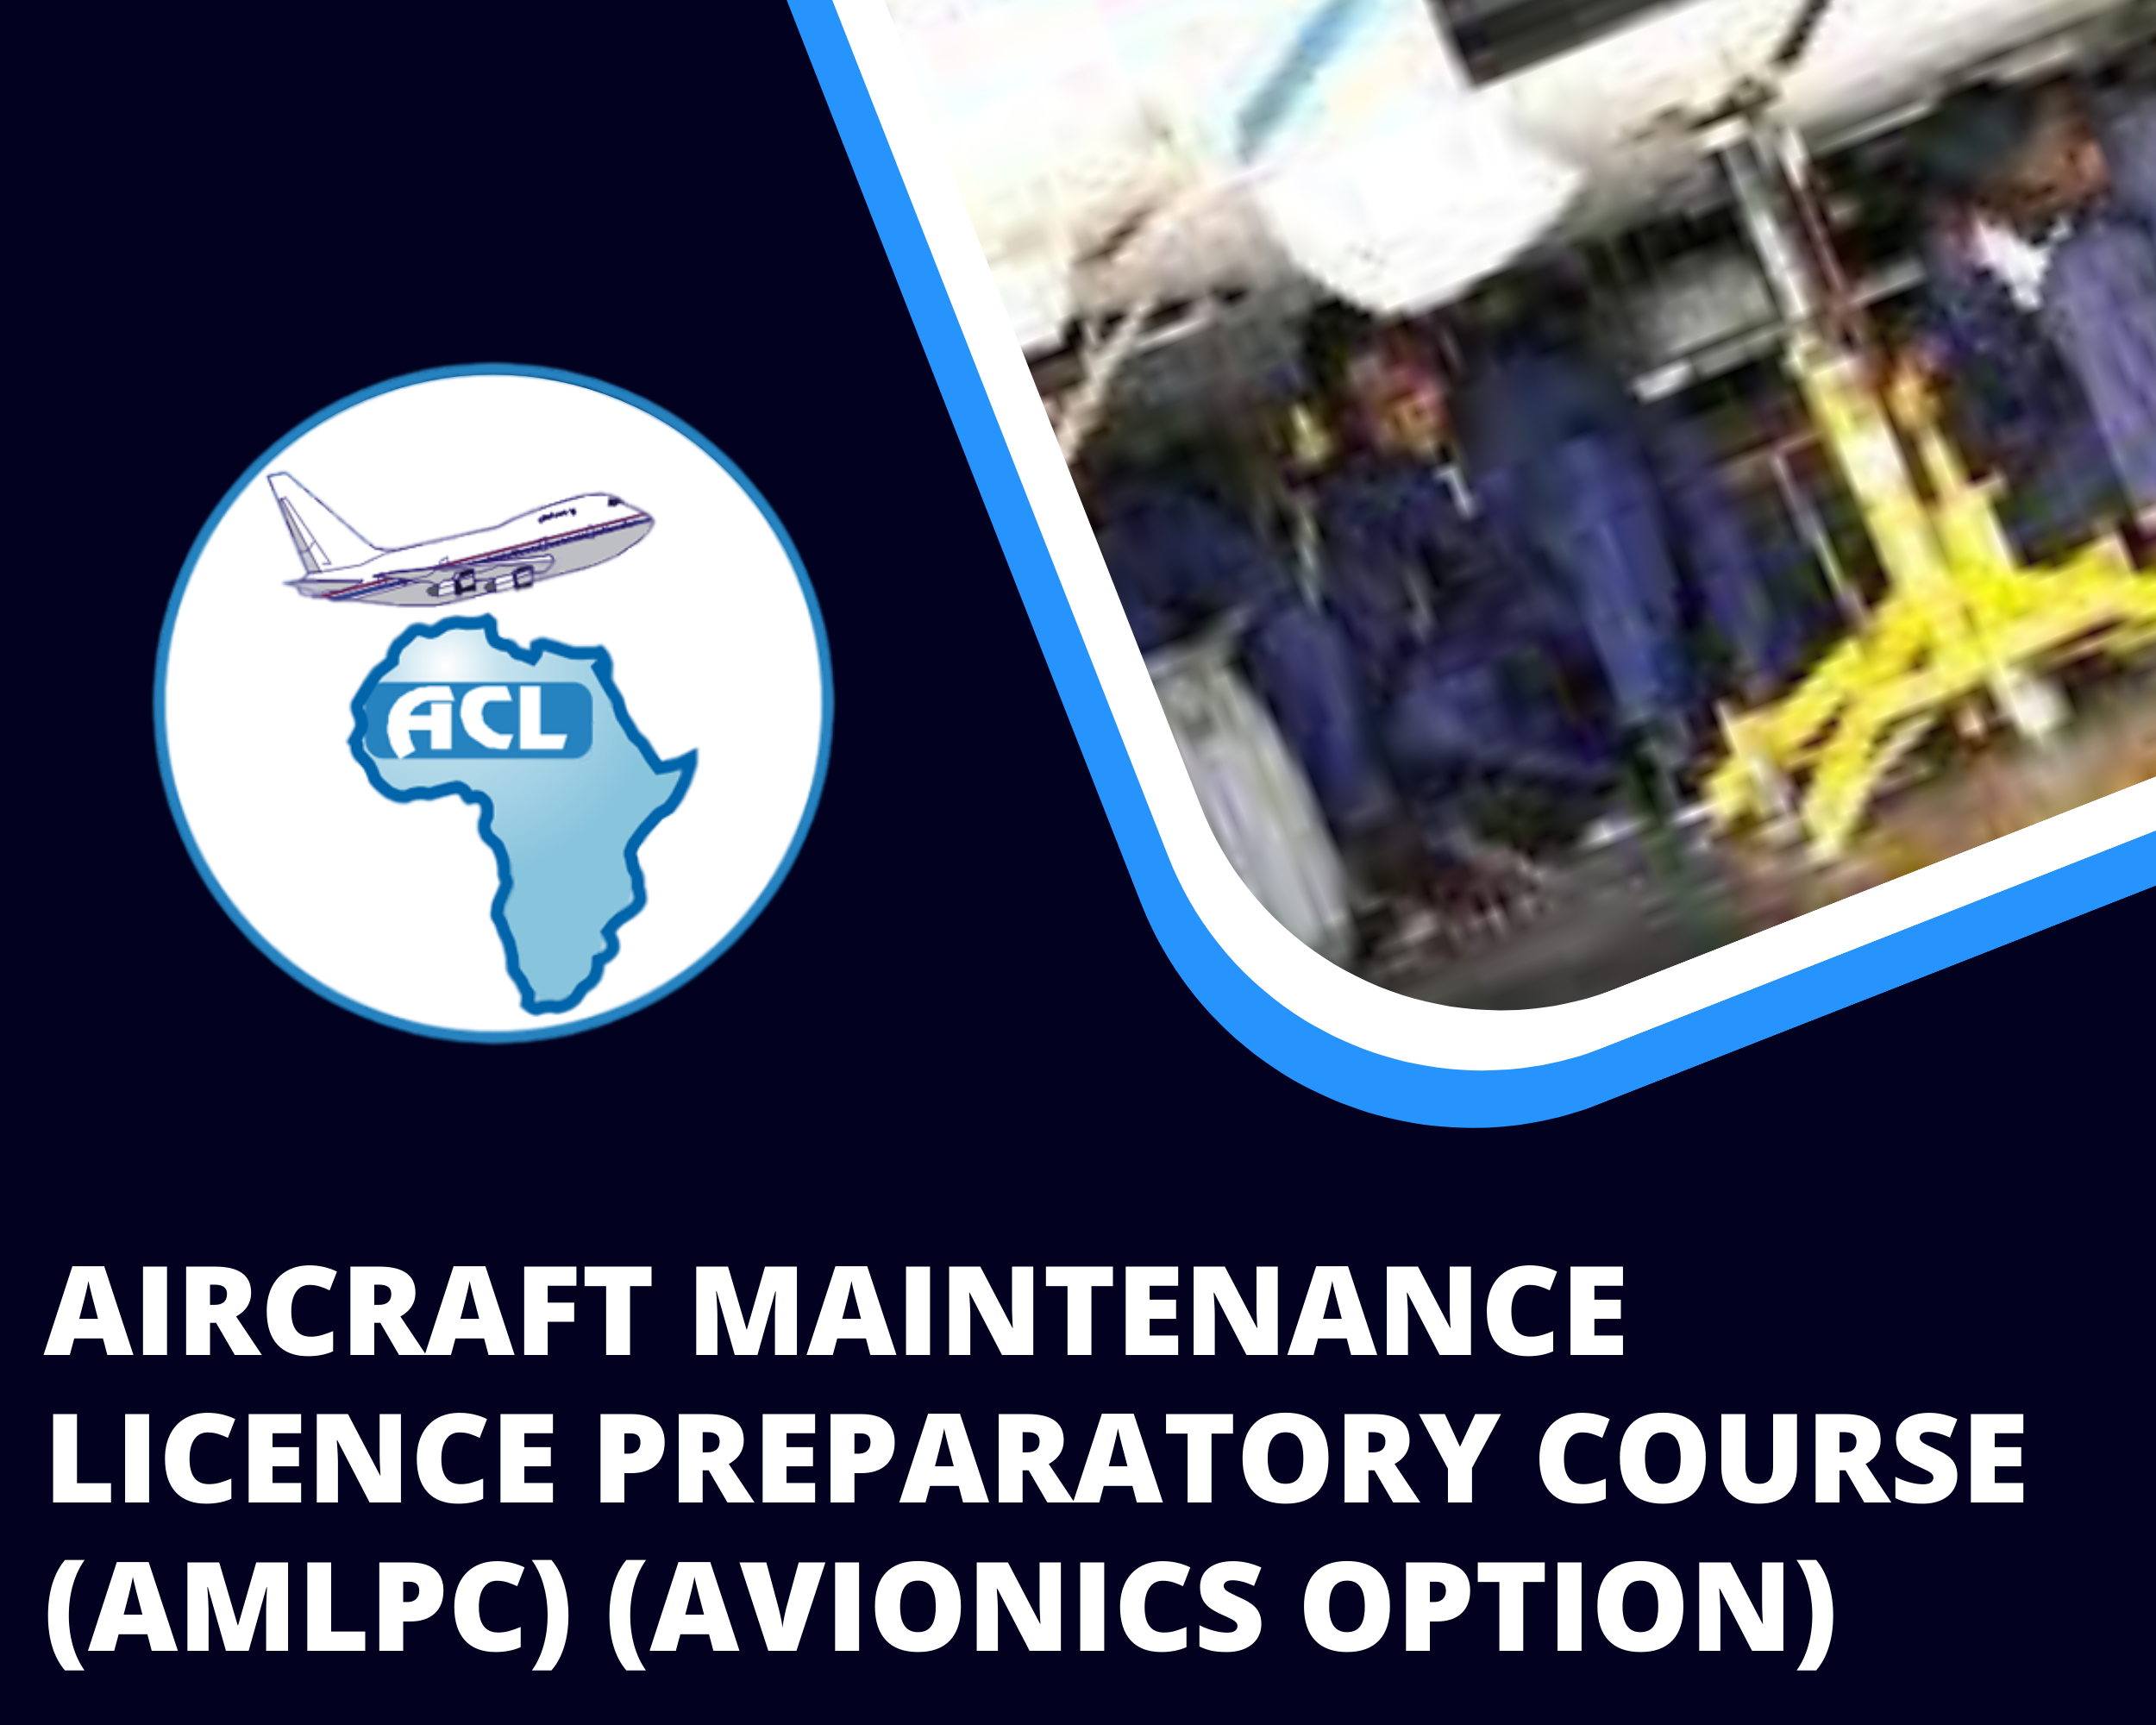 AIRCRAFT MAINTENANCE LICENCE PREPARATORY COURSE (AMLPC) (AVIONICS OPTION)